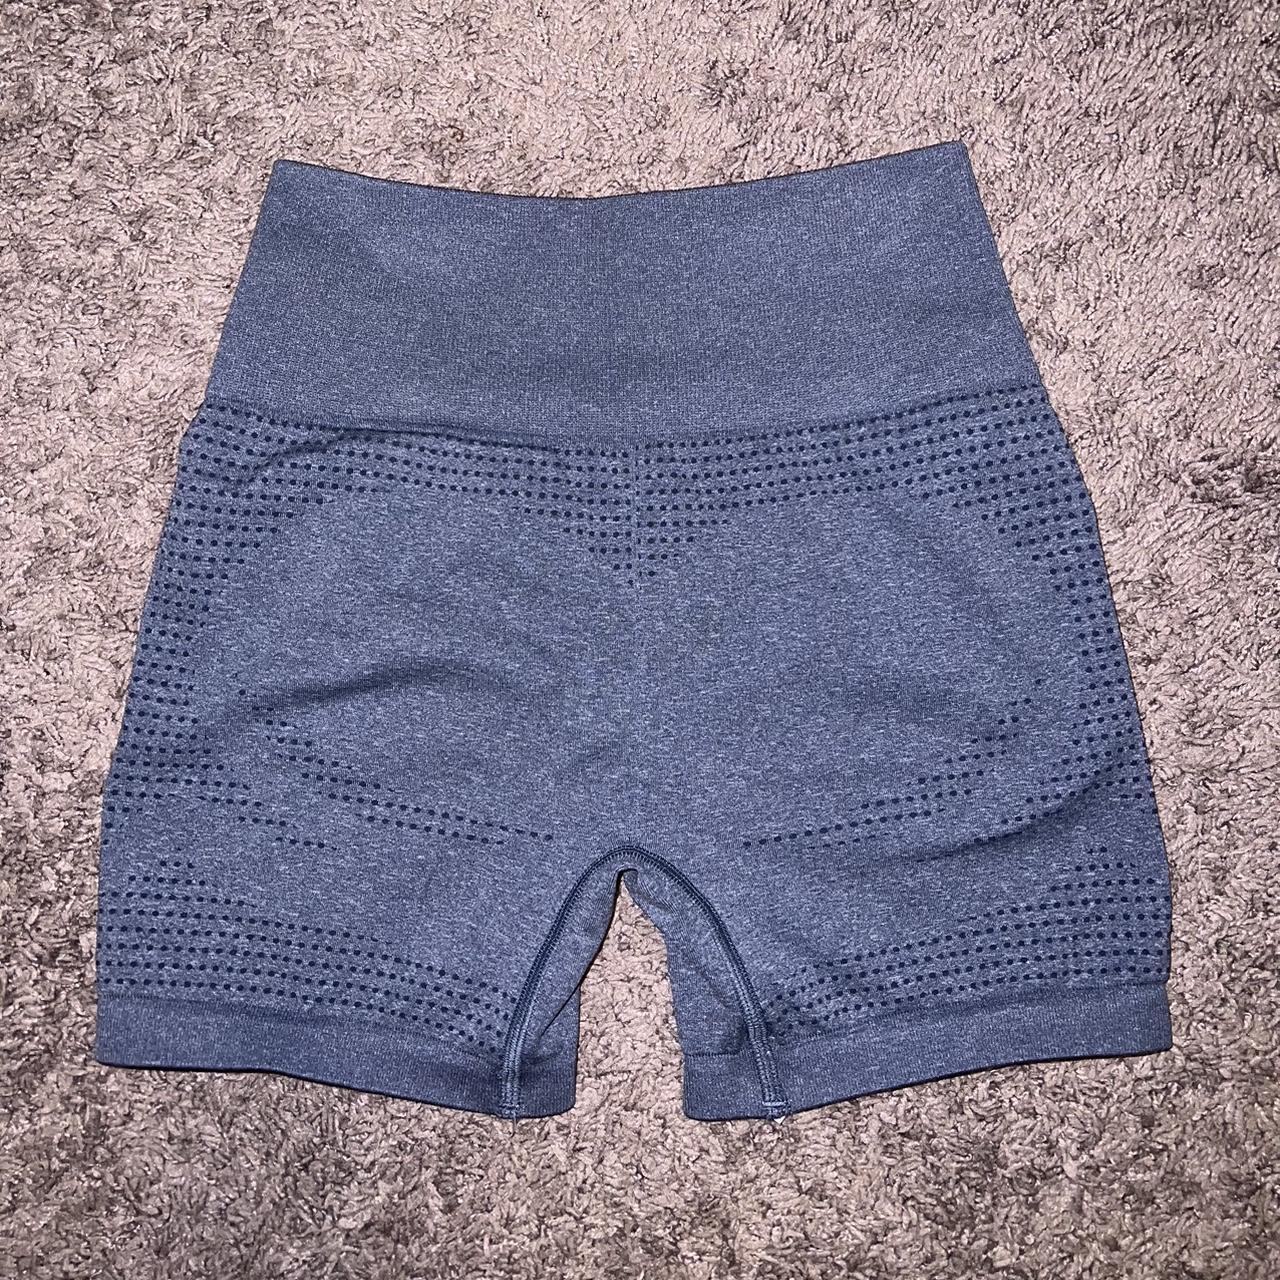 gymshark vital seamless 2.0 shorts in blue marl, Women's Fashion